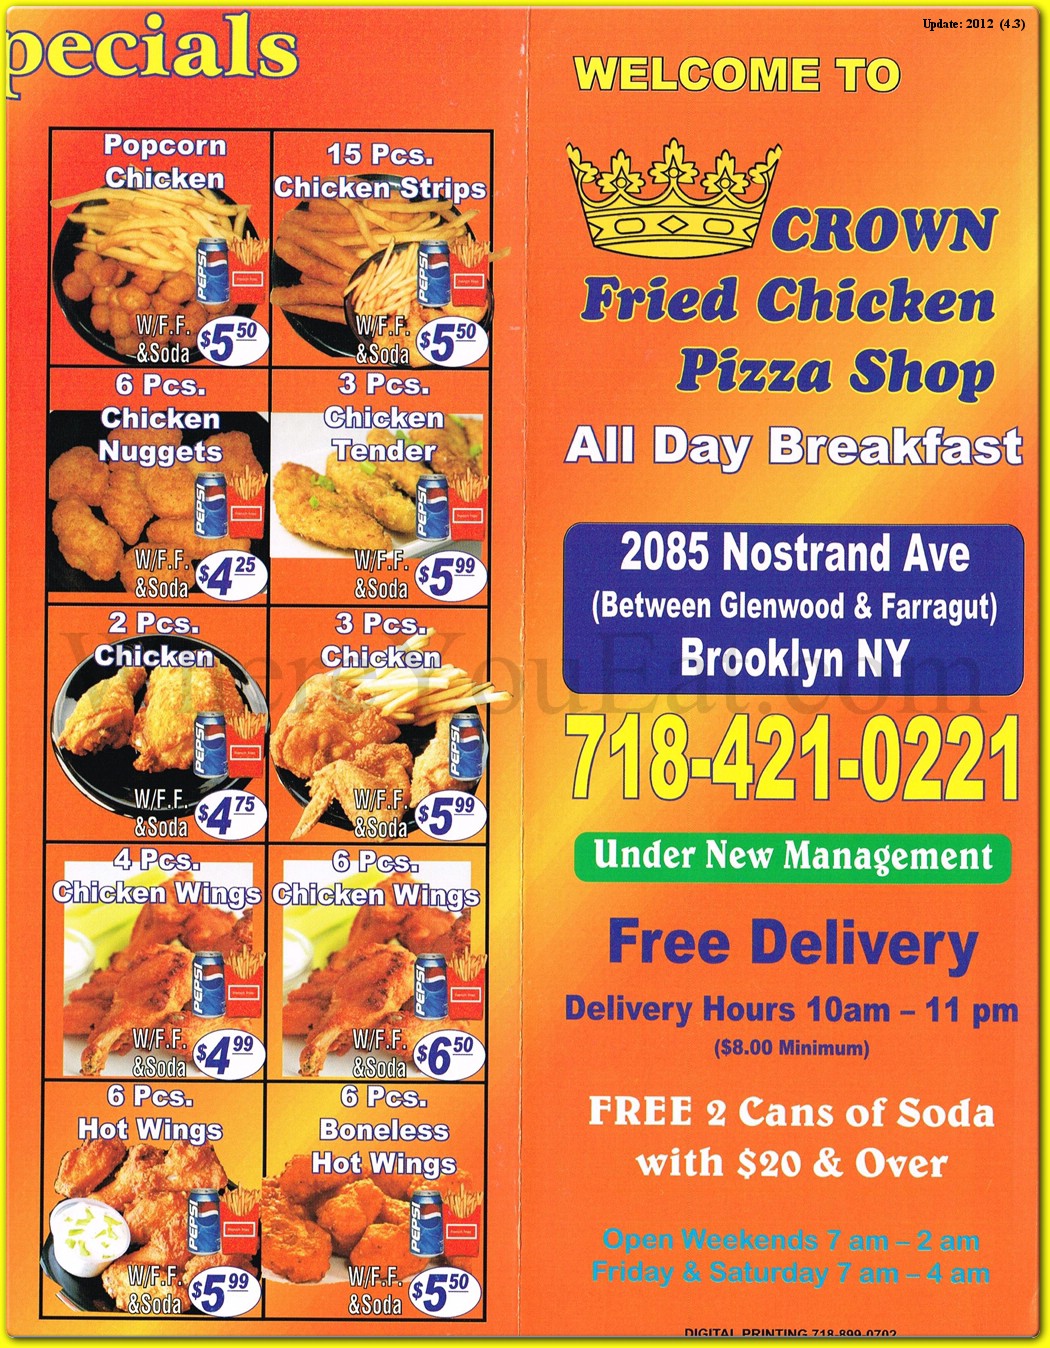 Crown Fried Chicken Restaurant in Brooklyn / Official Menus & Photos